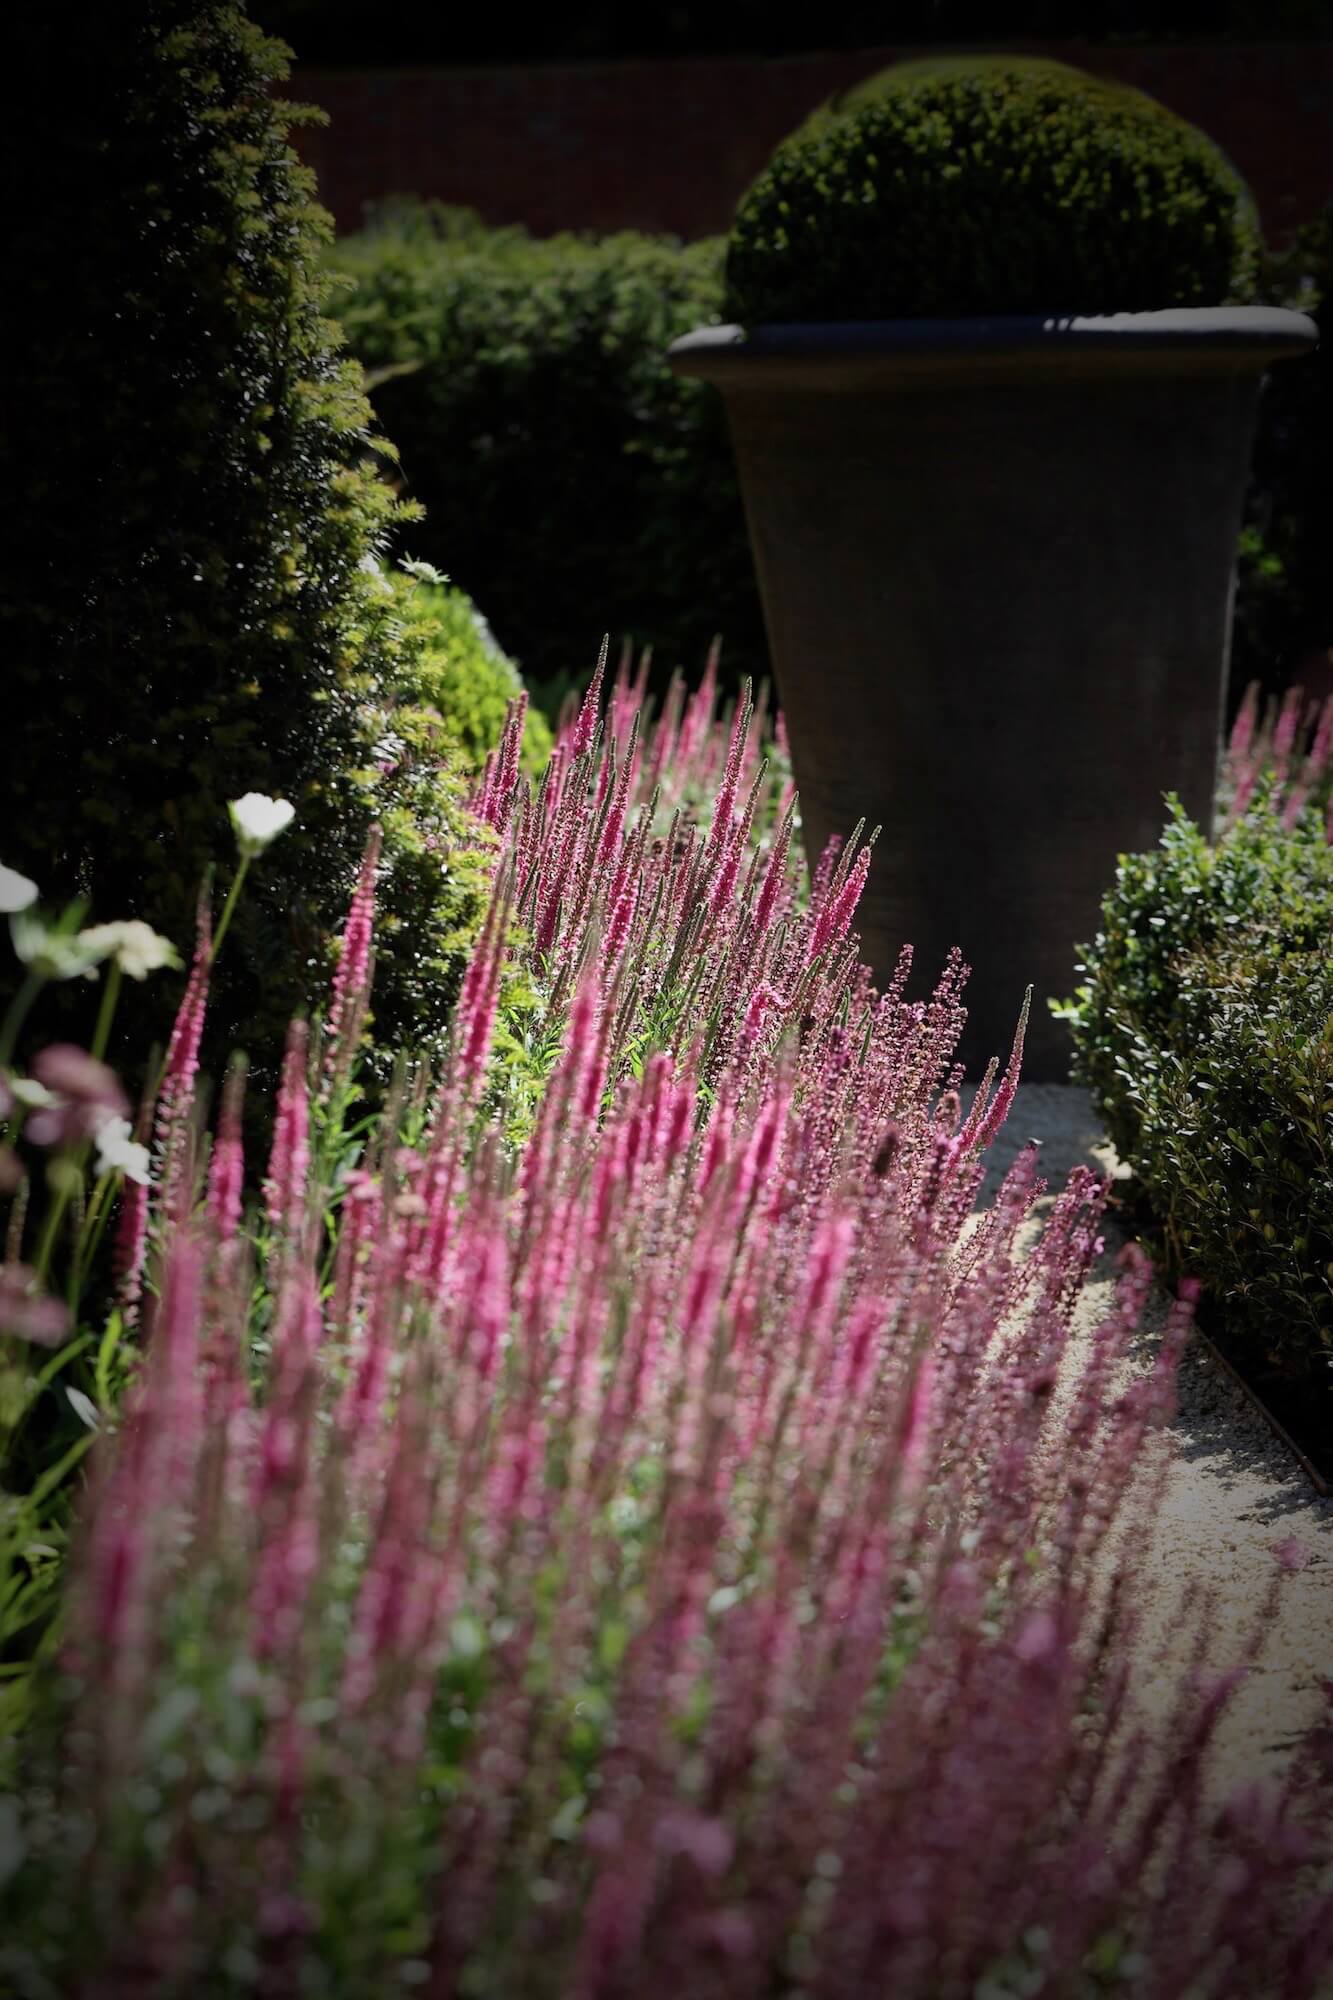 September flowers in a front garden in pink tones